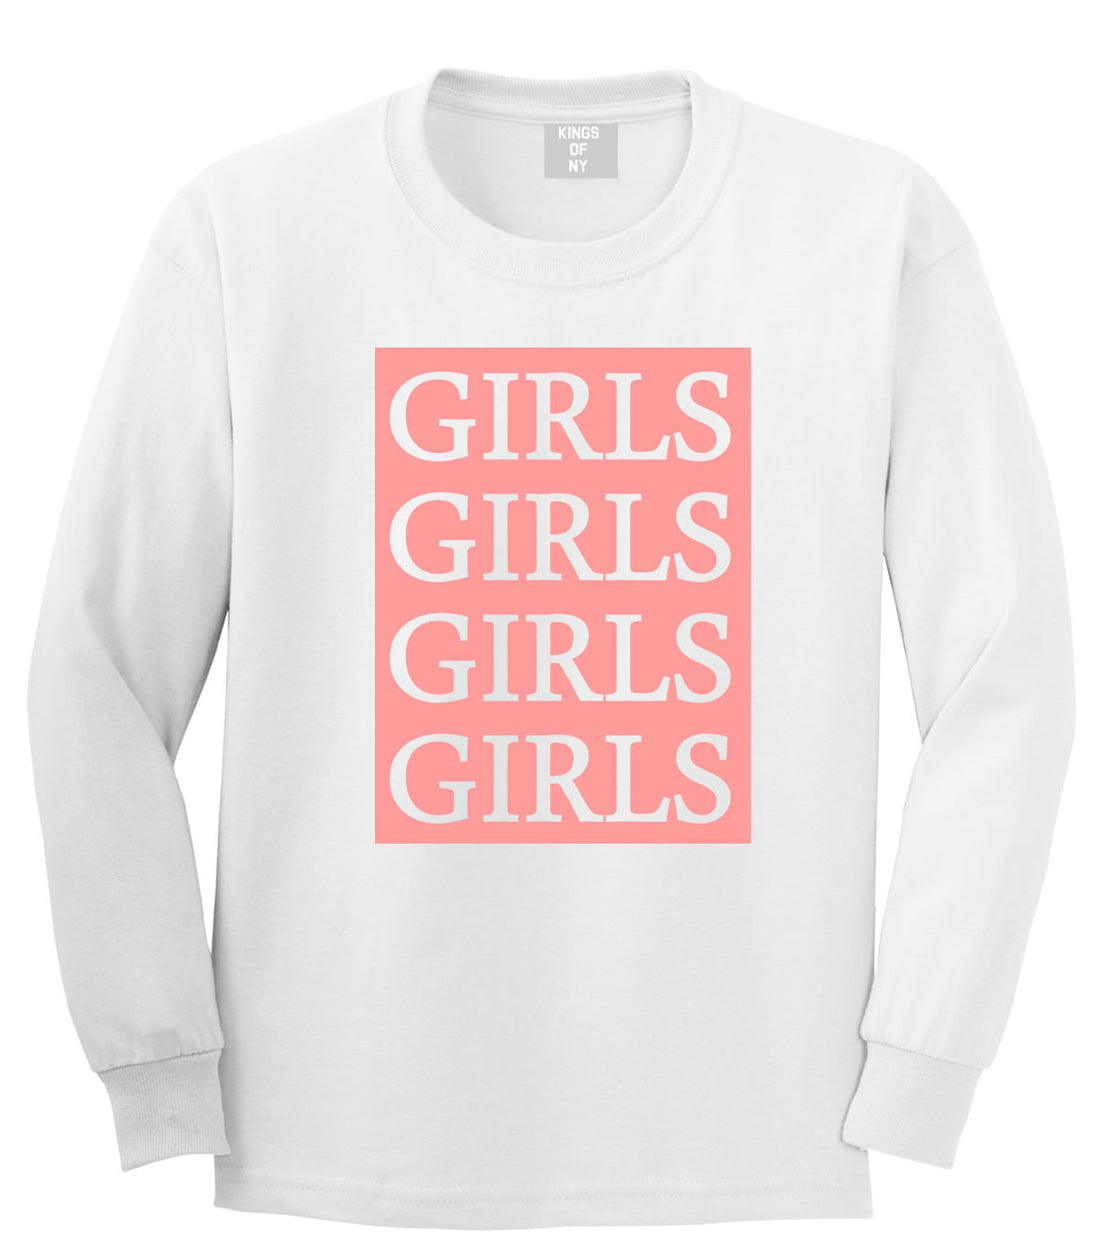 Girls Girls Girls Boys Kids Long Sleeve T-Shirt in White by Kings Of NY